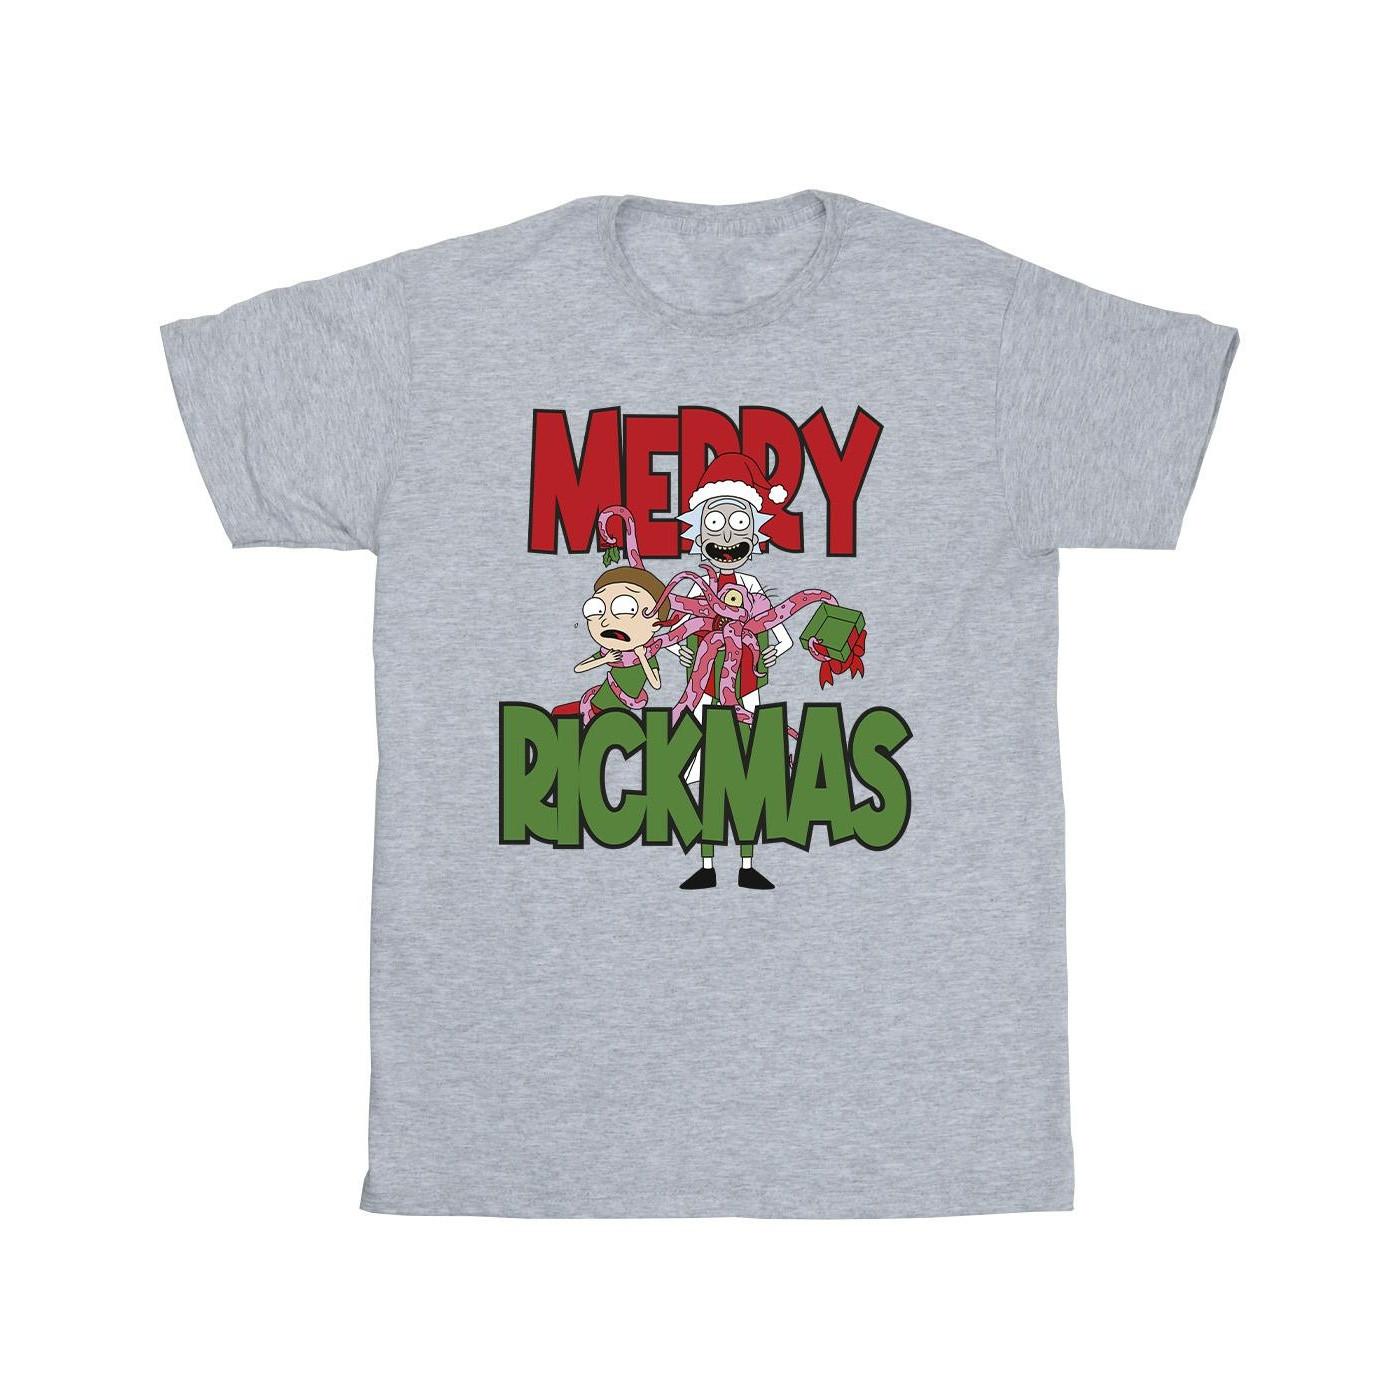 Merry Rickmas Tshirt Herren Grau L von Rick And Morty